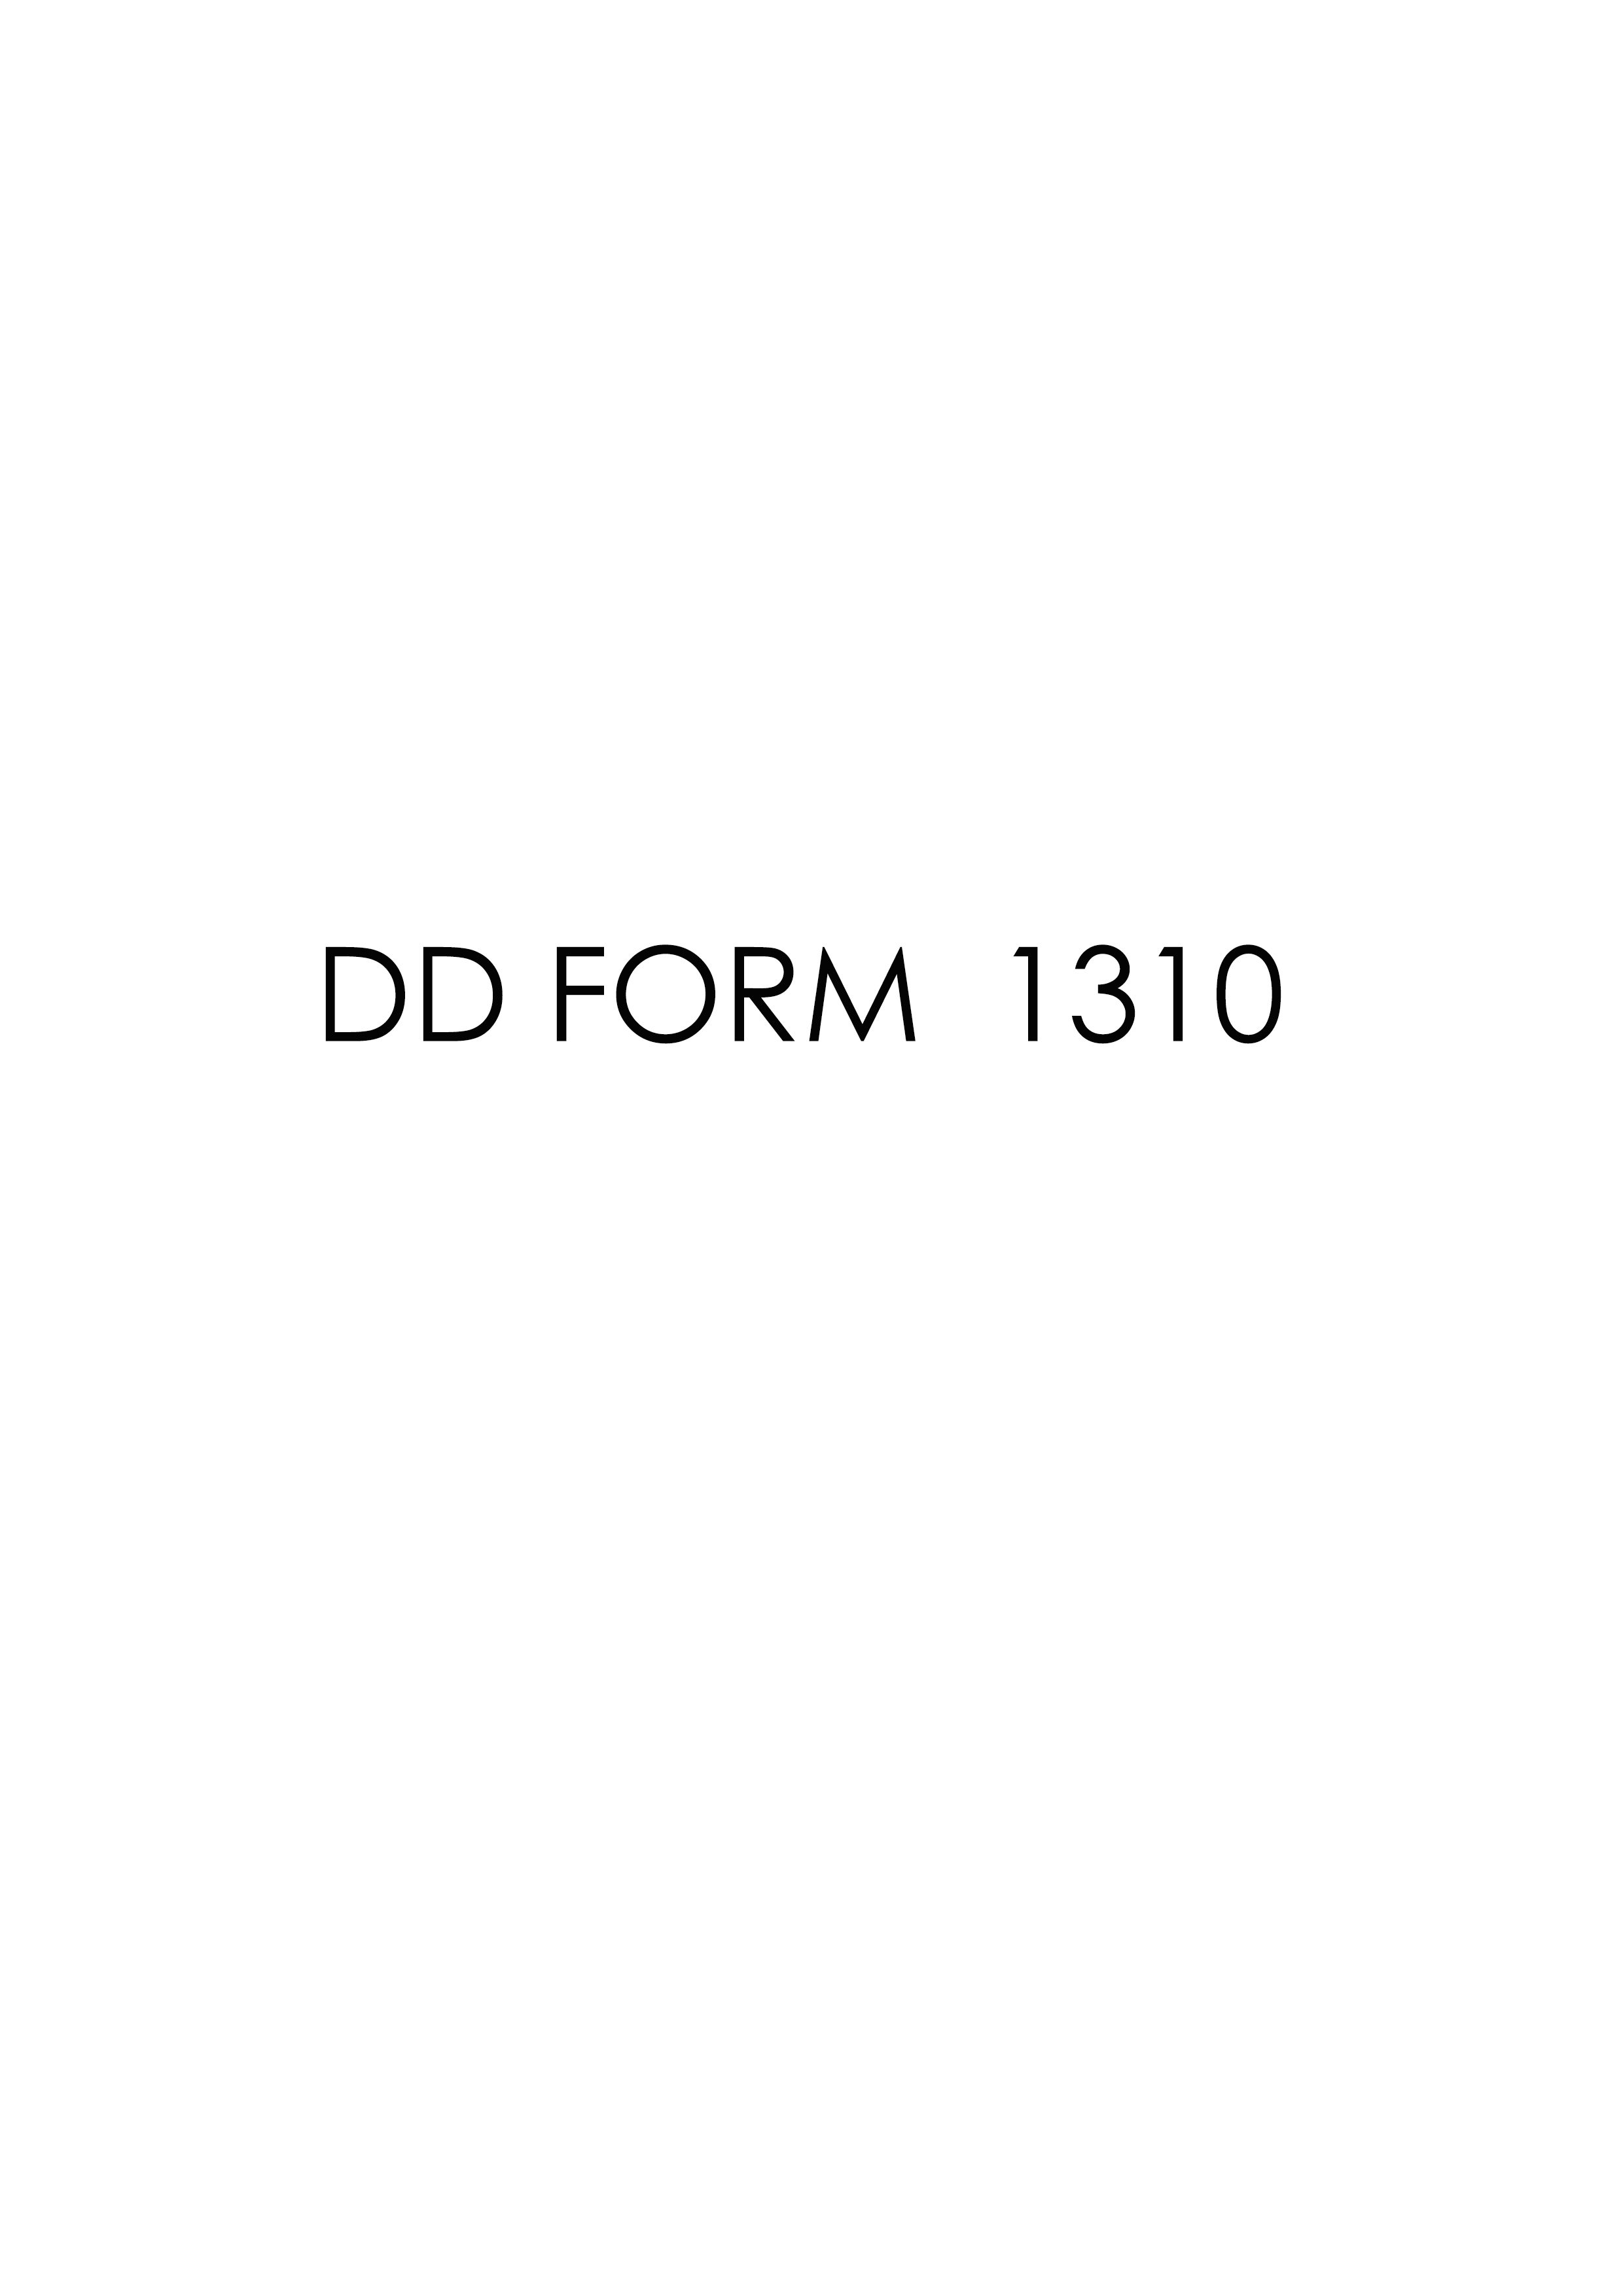 Download dd 1310 Form